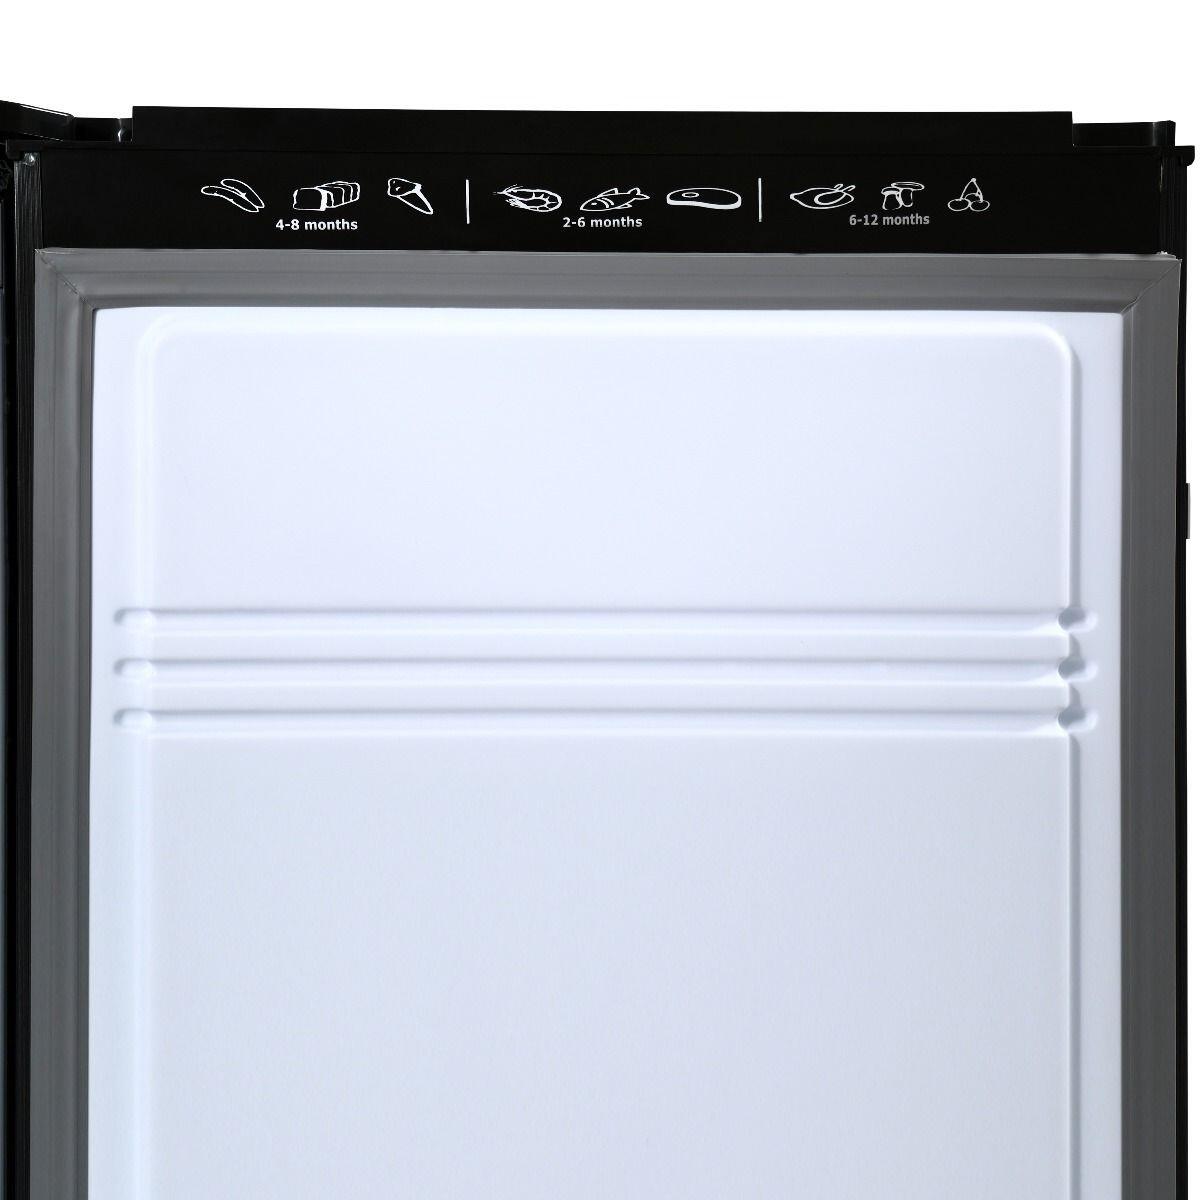 Fresh No-Frost Upright Freezer, 6 Drawers, Black - FNU-MT270B - Freezers